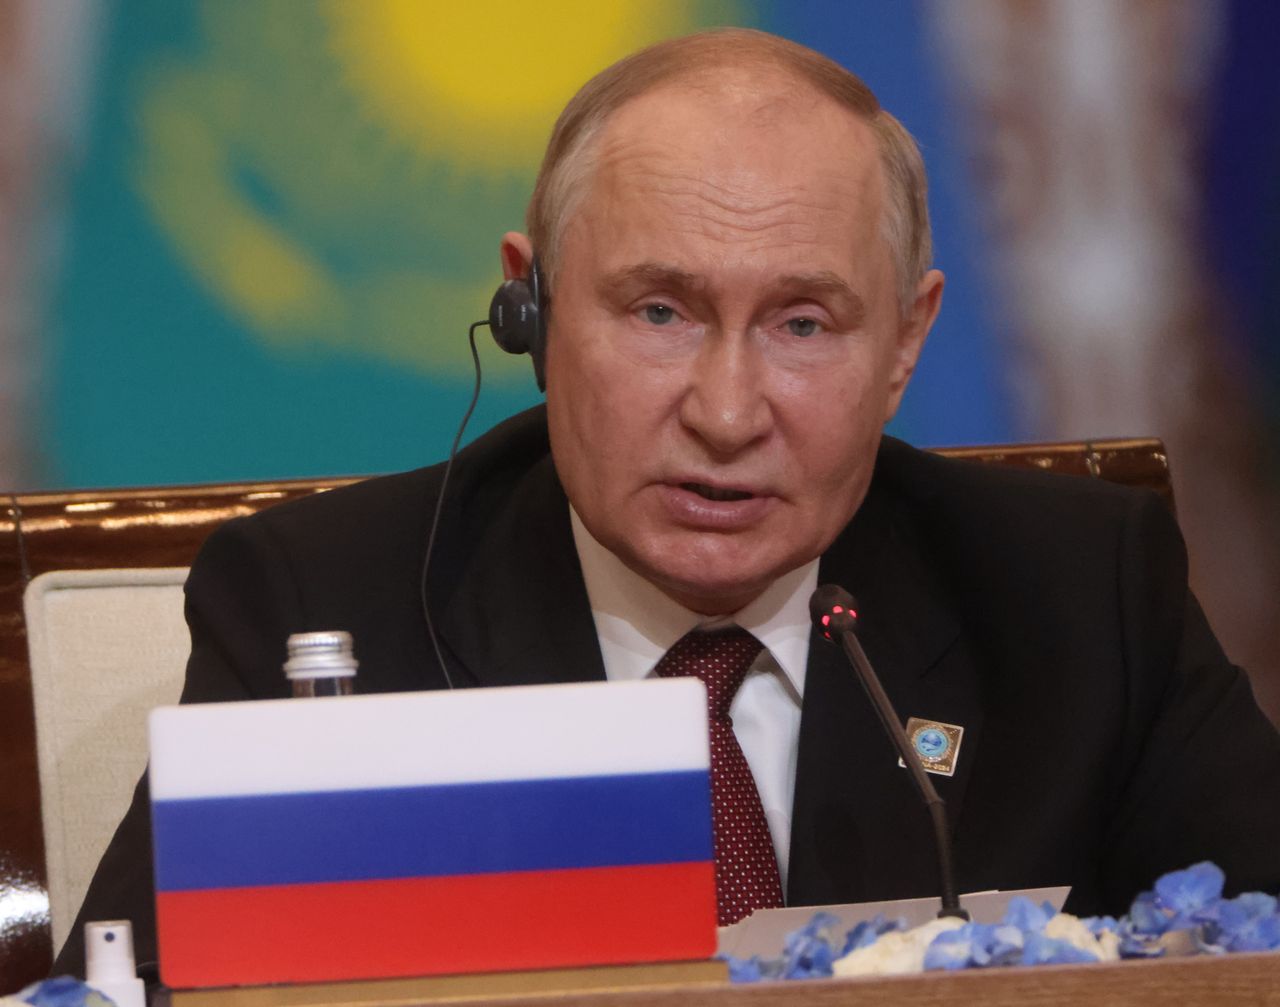 Putin demands capitulation, rejects ceasefire negotiations